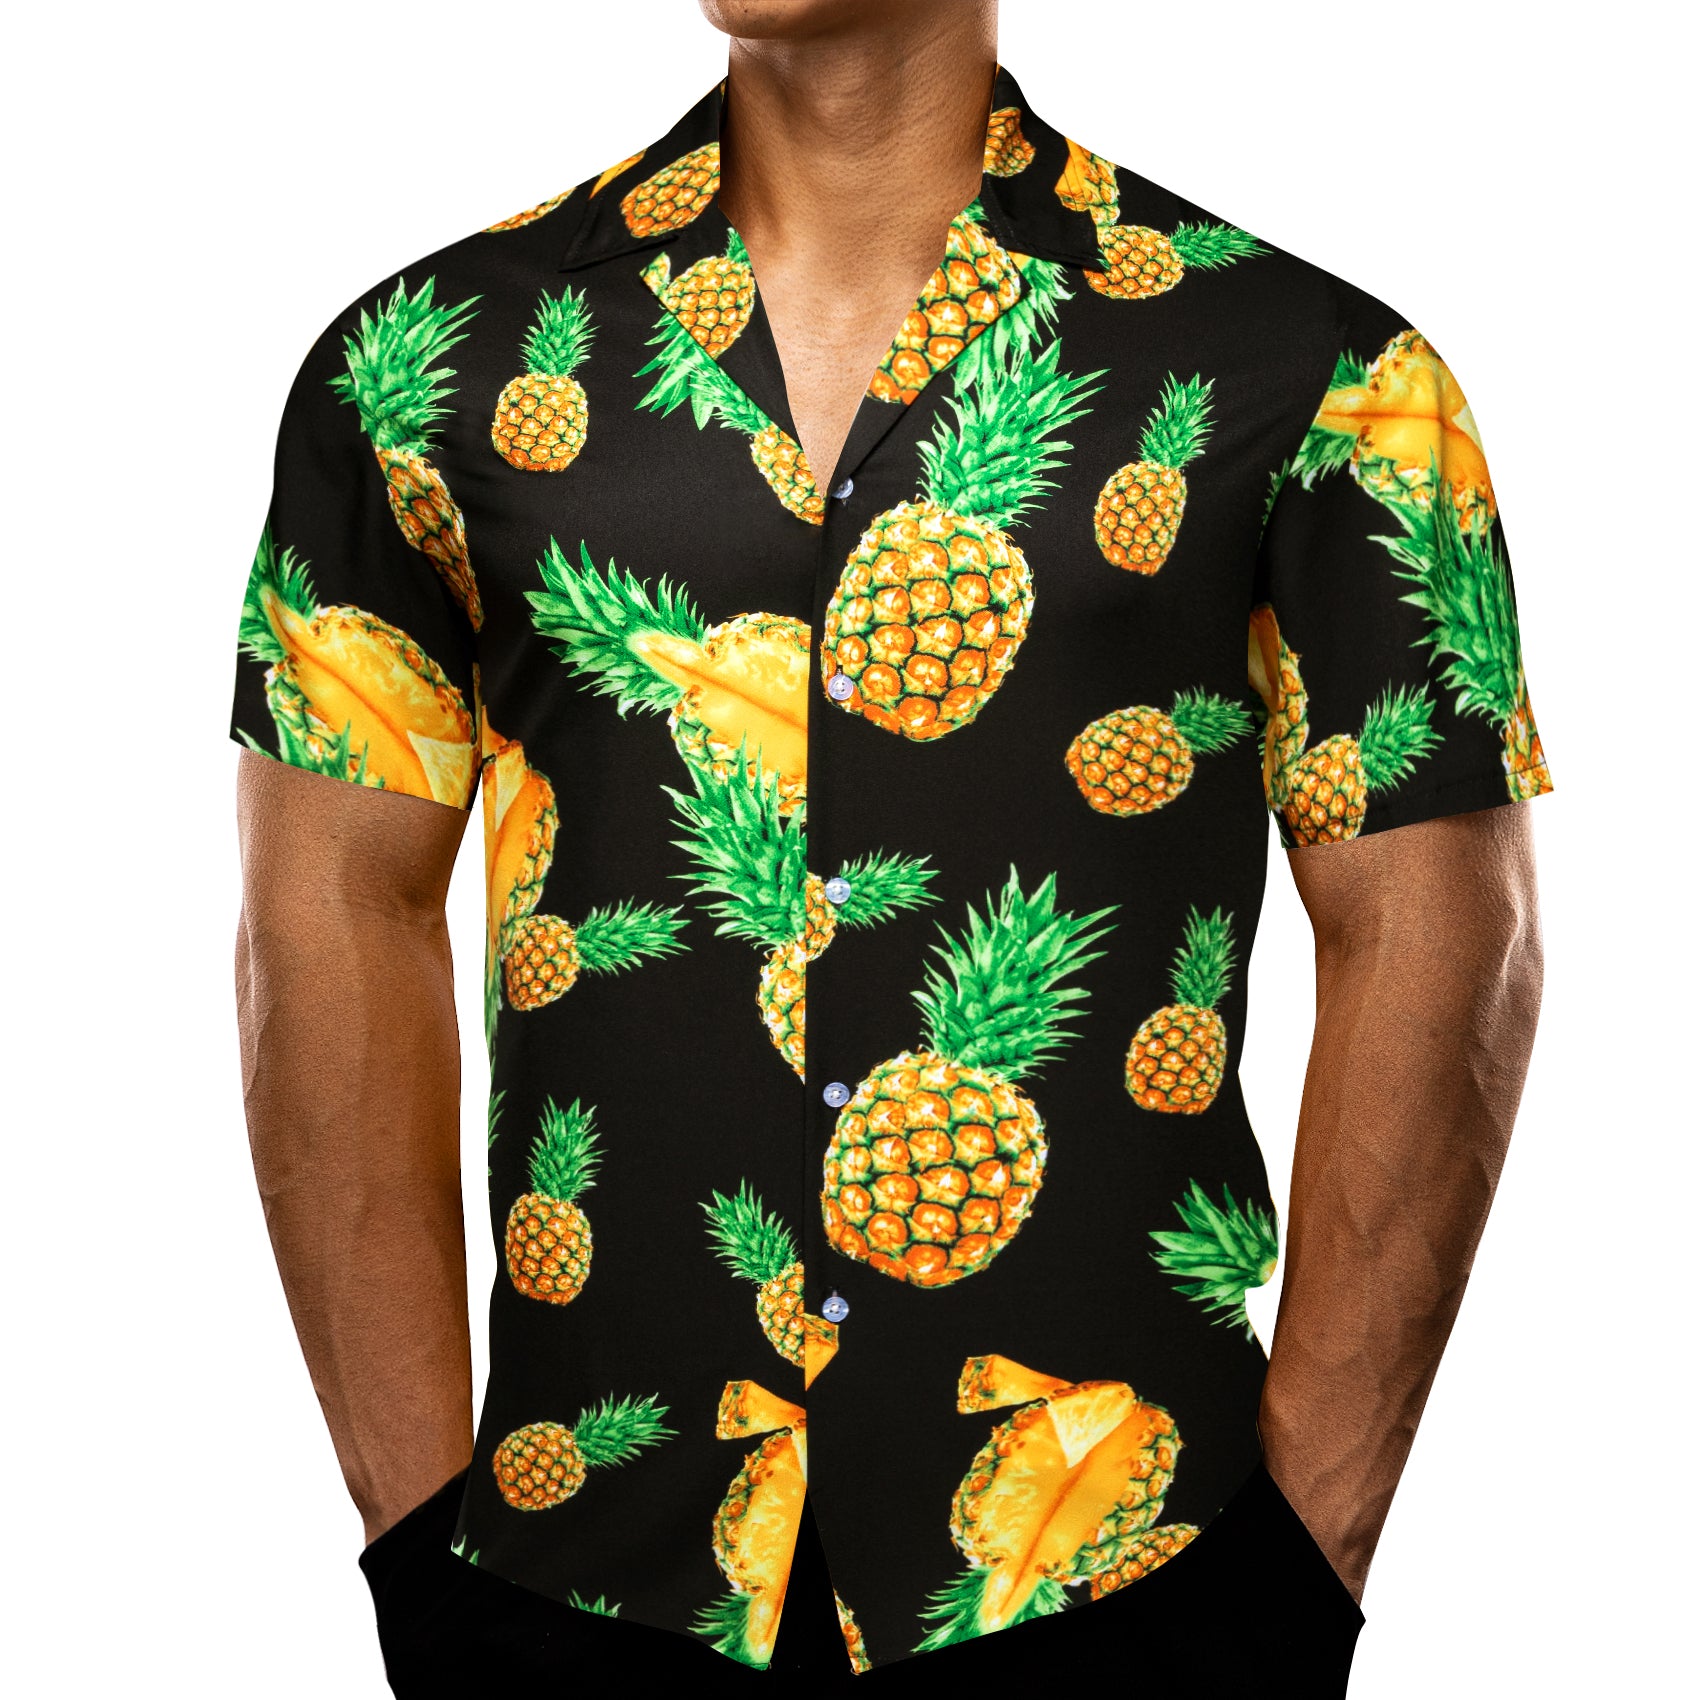 Men's Black Pineapple Floral Pattern Short Sleeves Summer Hawaii Shirt